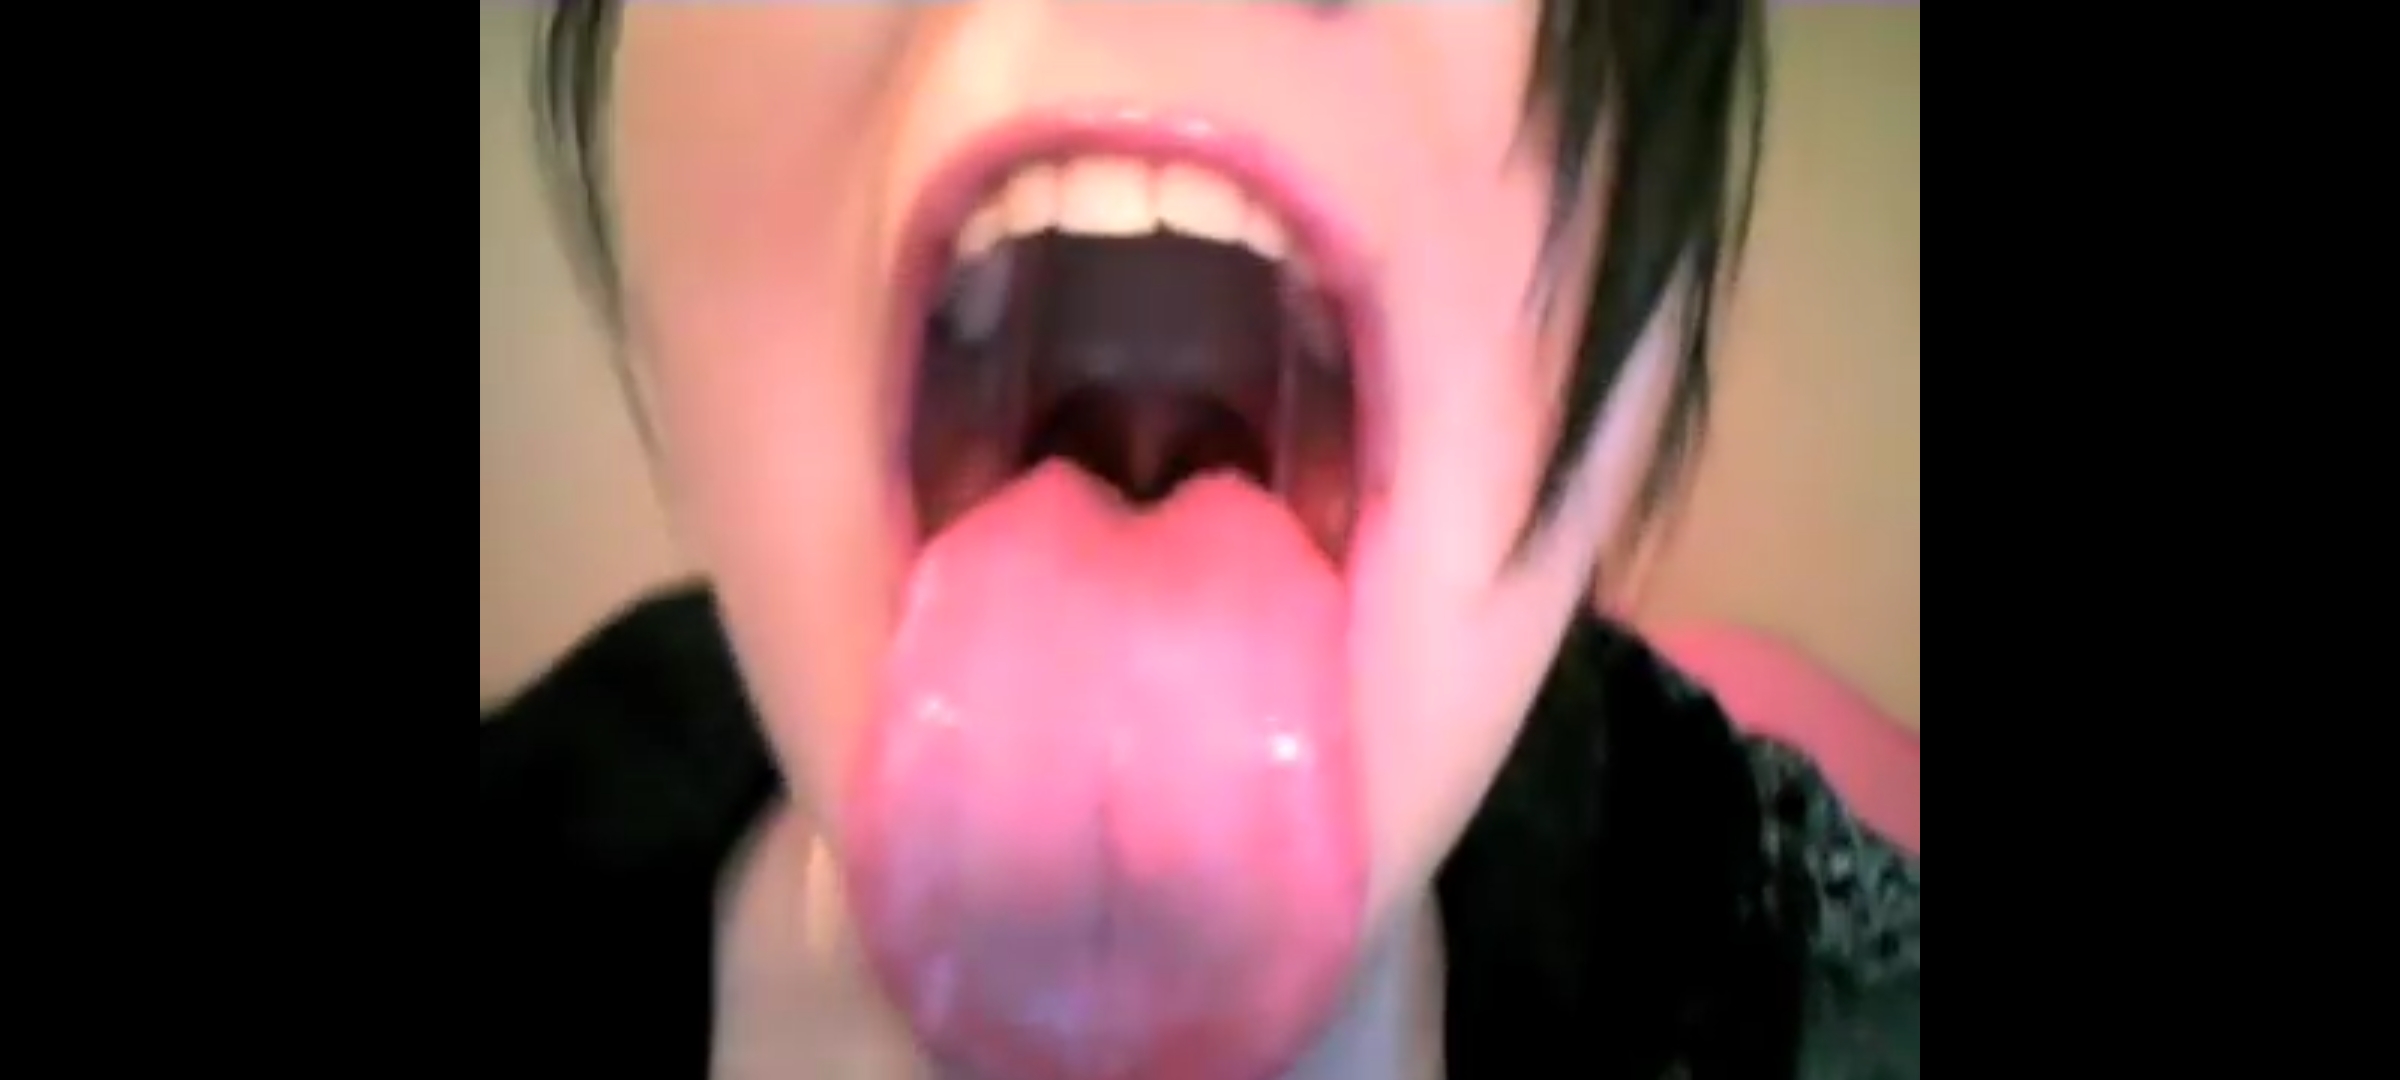 Open Wide Juicy Throat Close-up